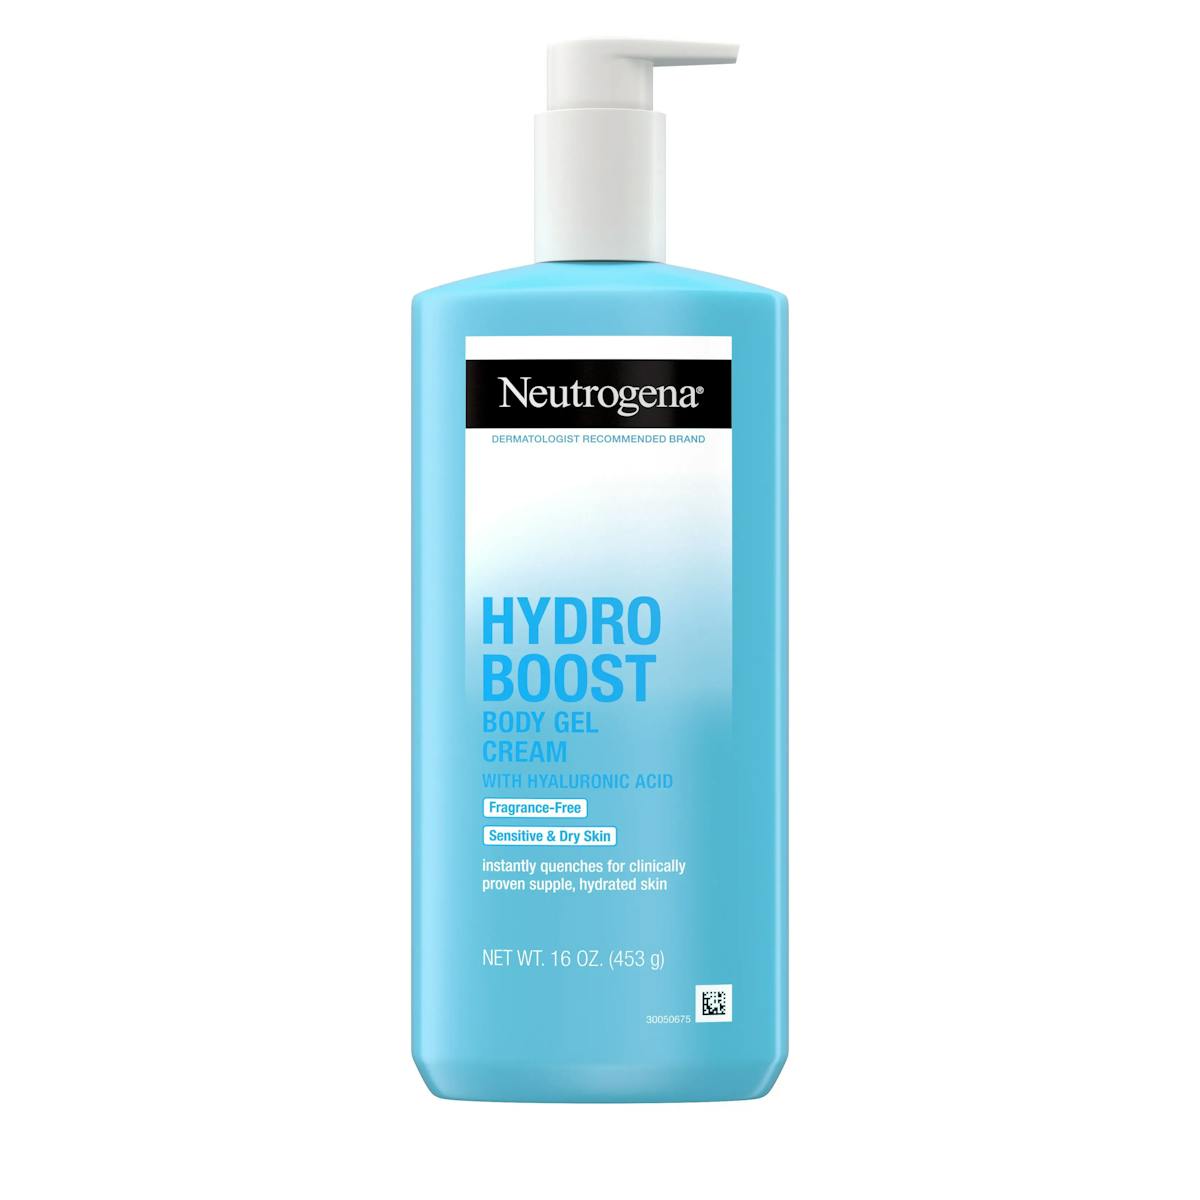 Hydro Boost Gel Body for Dry, Sensitive Skin